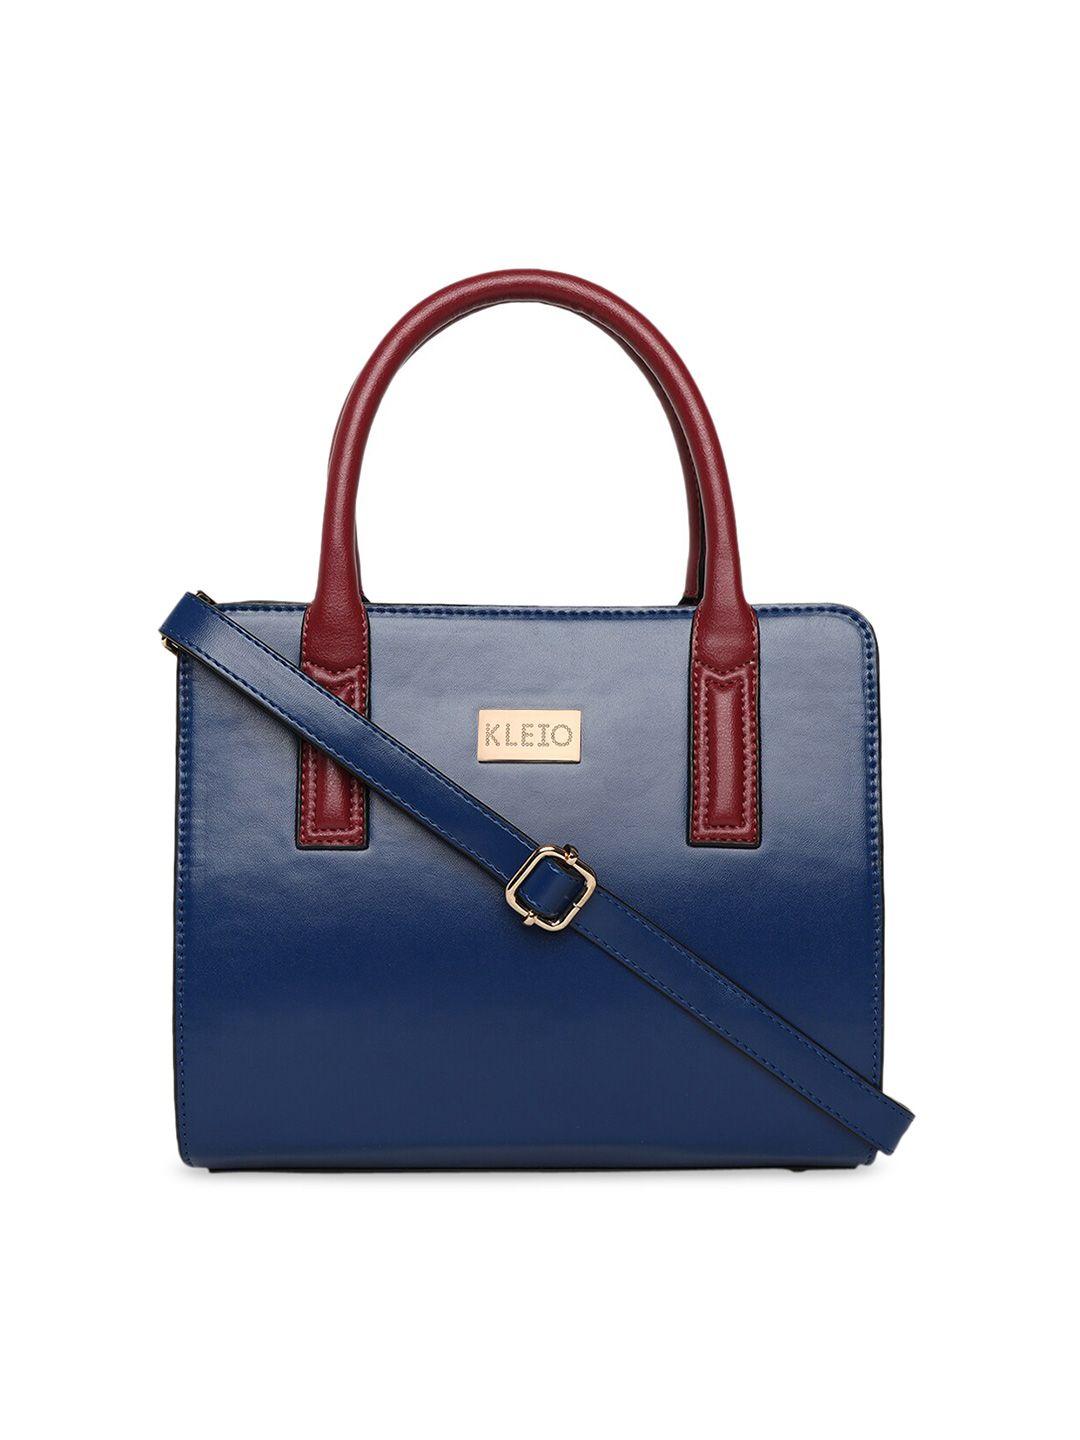 kleio blue colourblocked pu structured handheld bag with tasselled